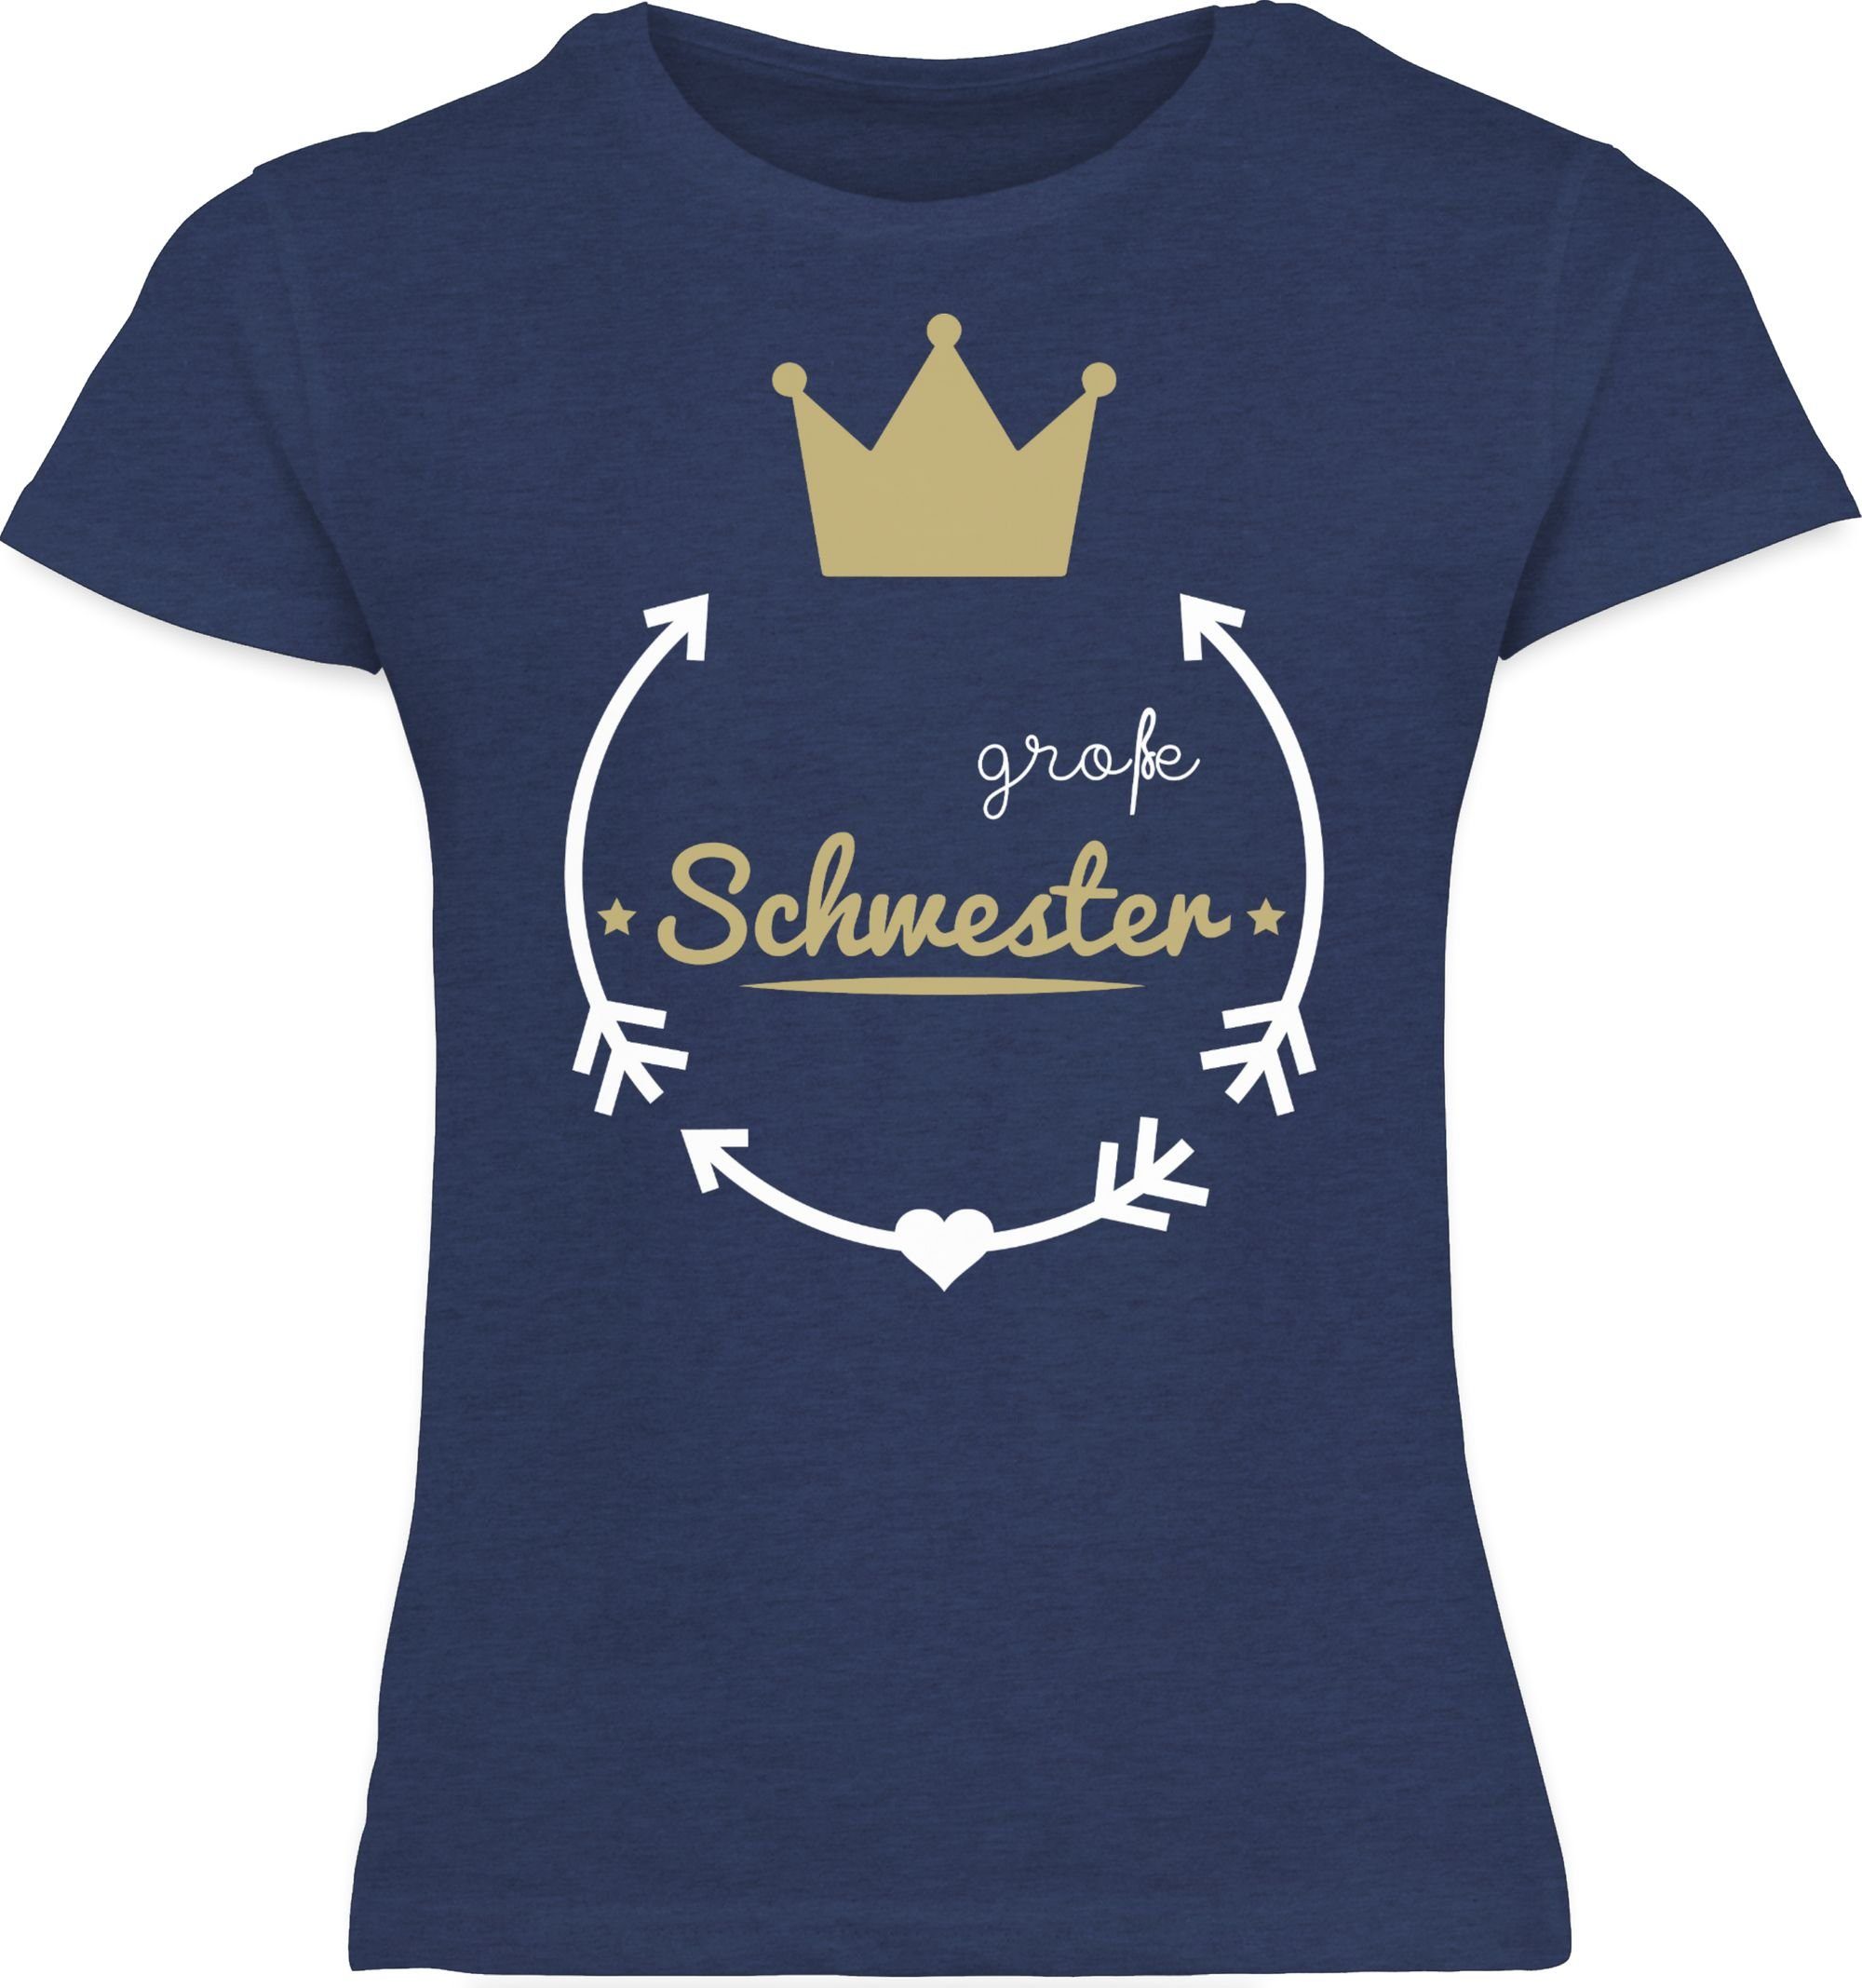 Dunkelblau Krone Schwester Meliert Geschwister Geschenk Shirtracer 2 Große Schwester T-Shirt Weiss - -